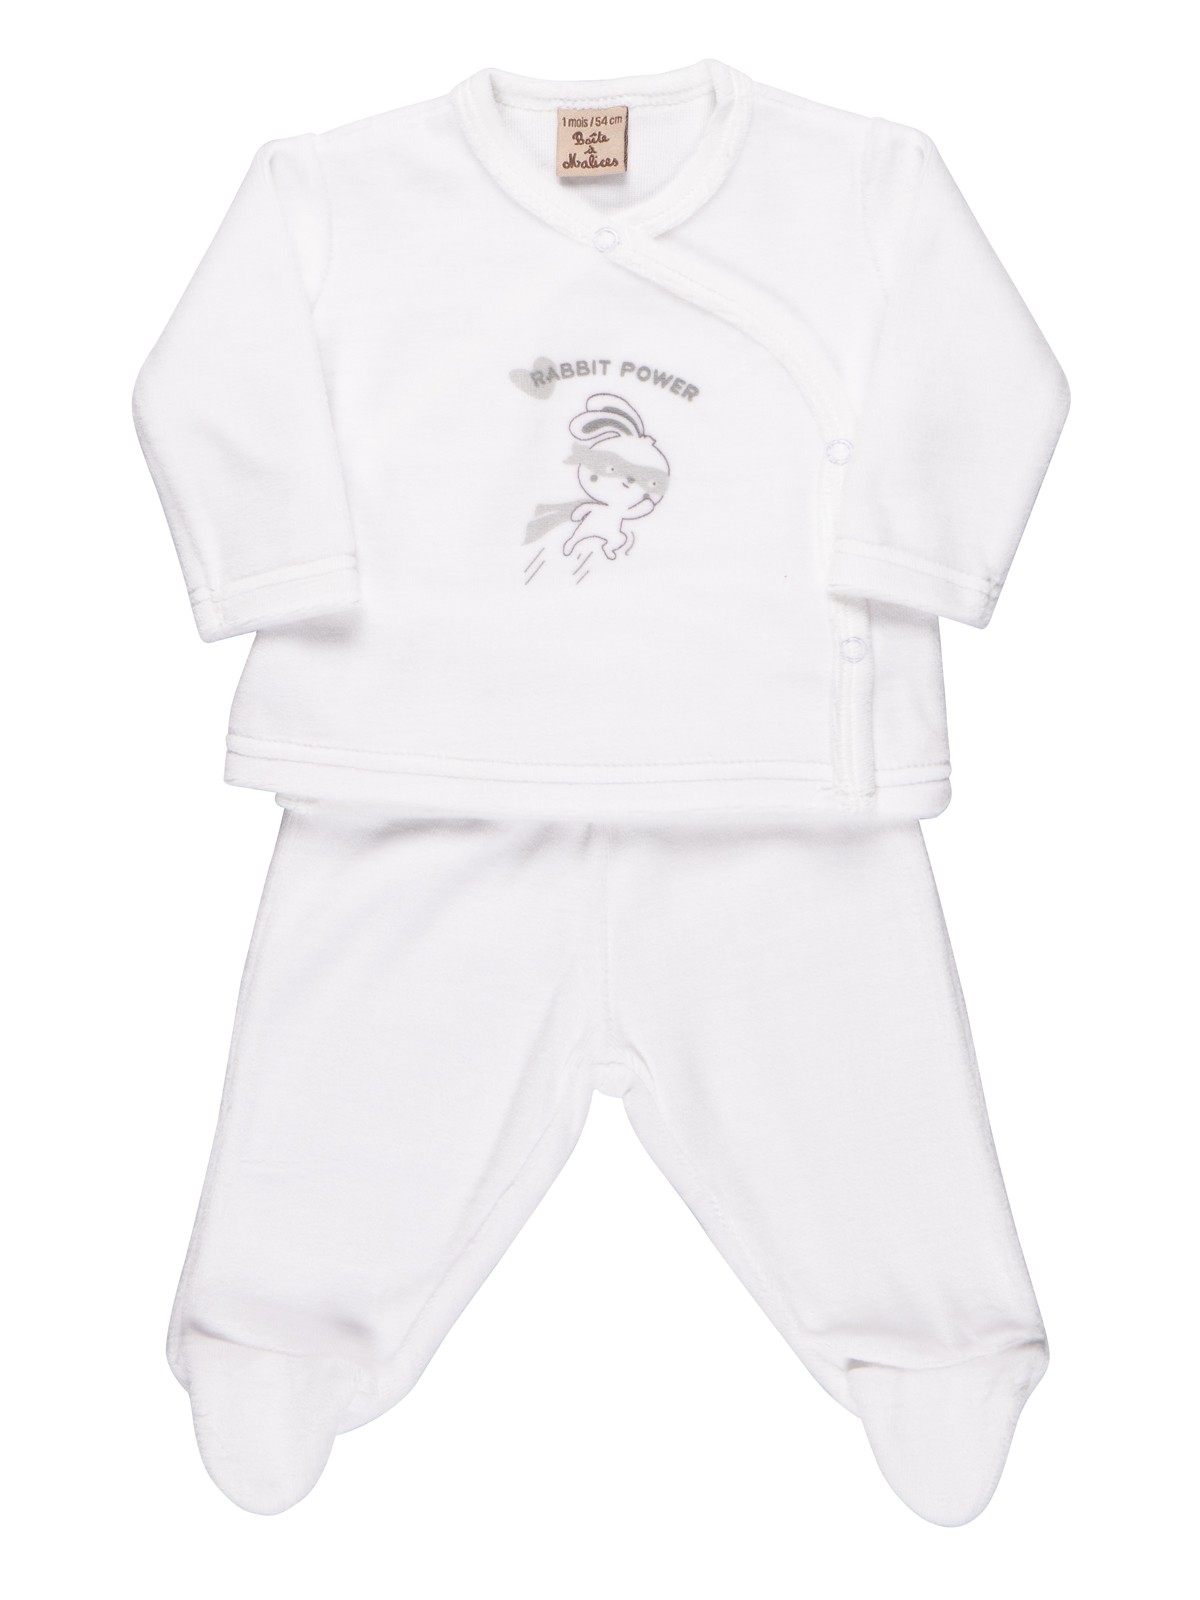 Pyjama naissance écureuil bébé (0-9M) - DistriCenter